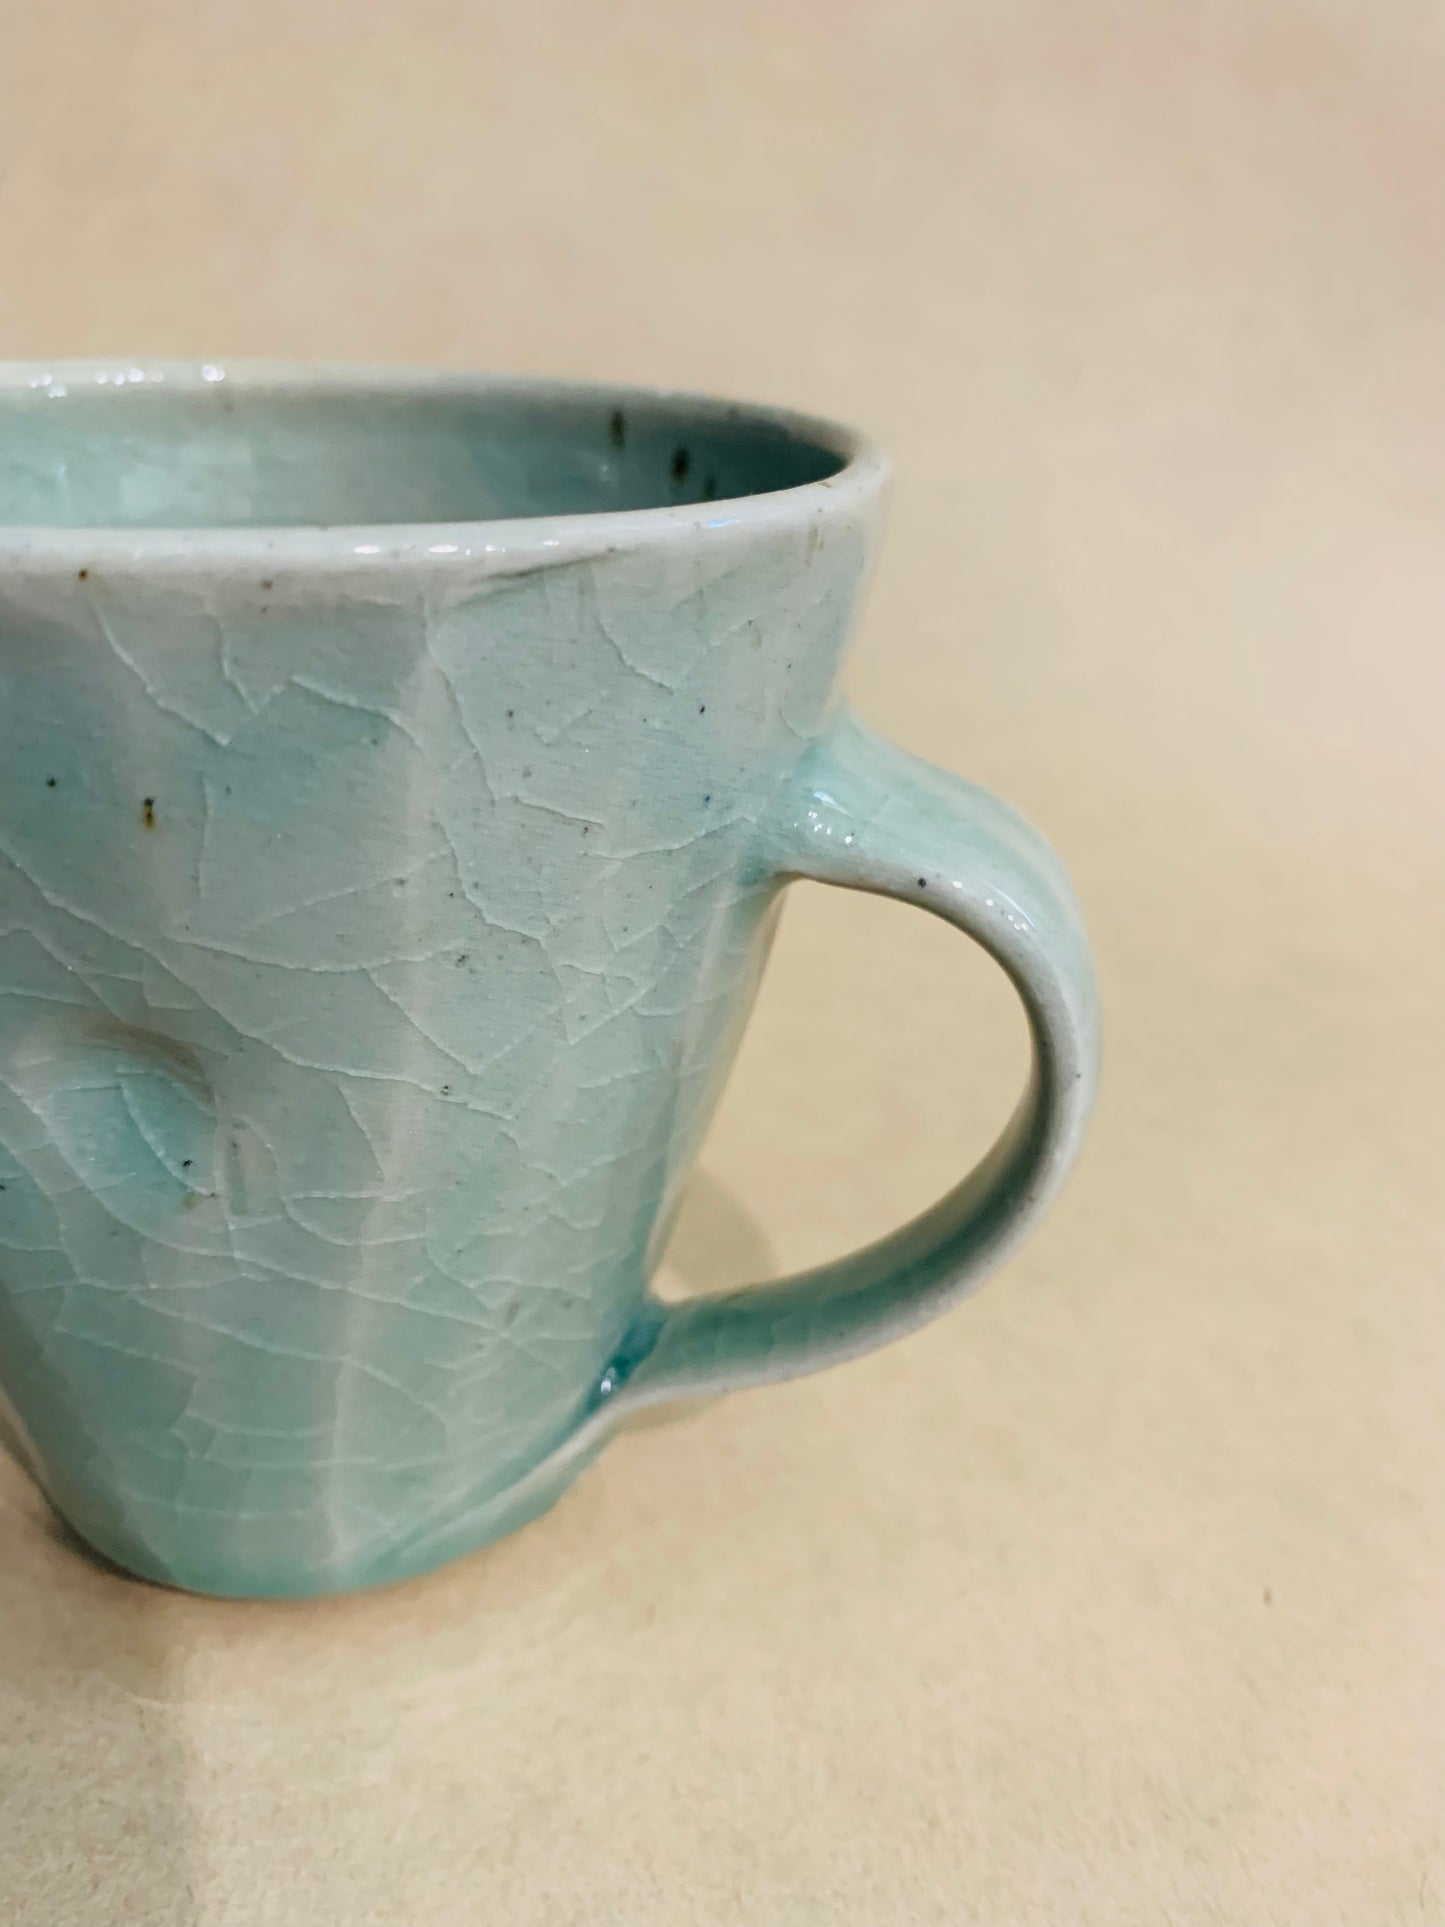 Merrilyn Stock Pale Green Mug